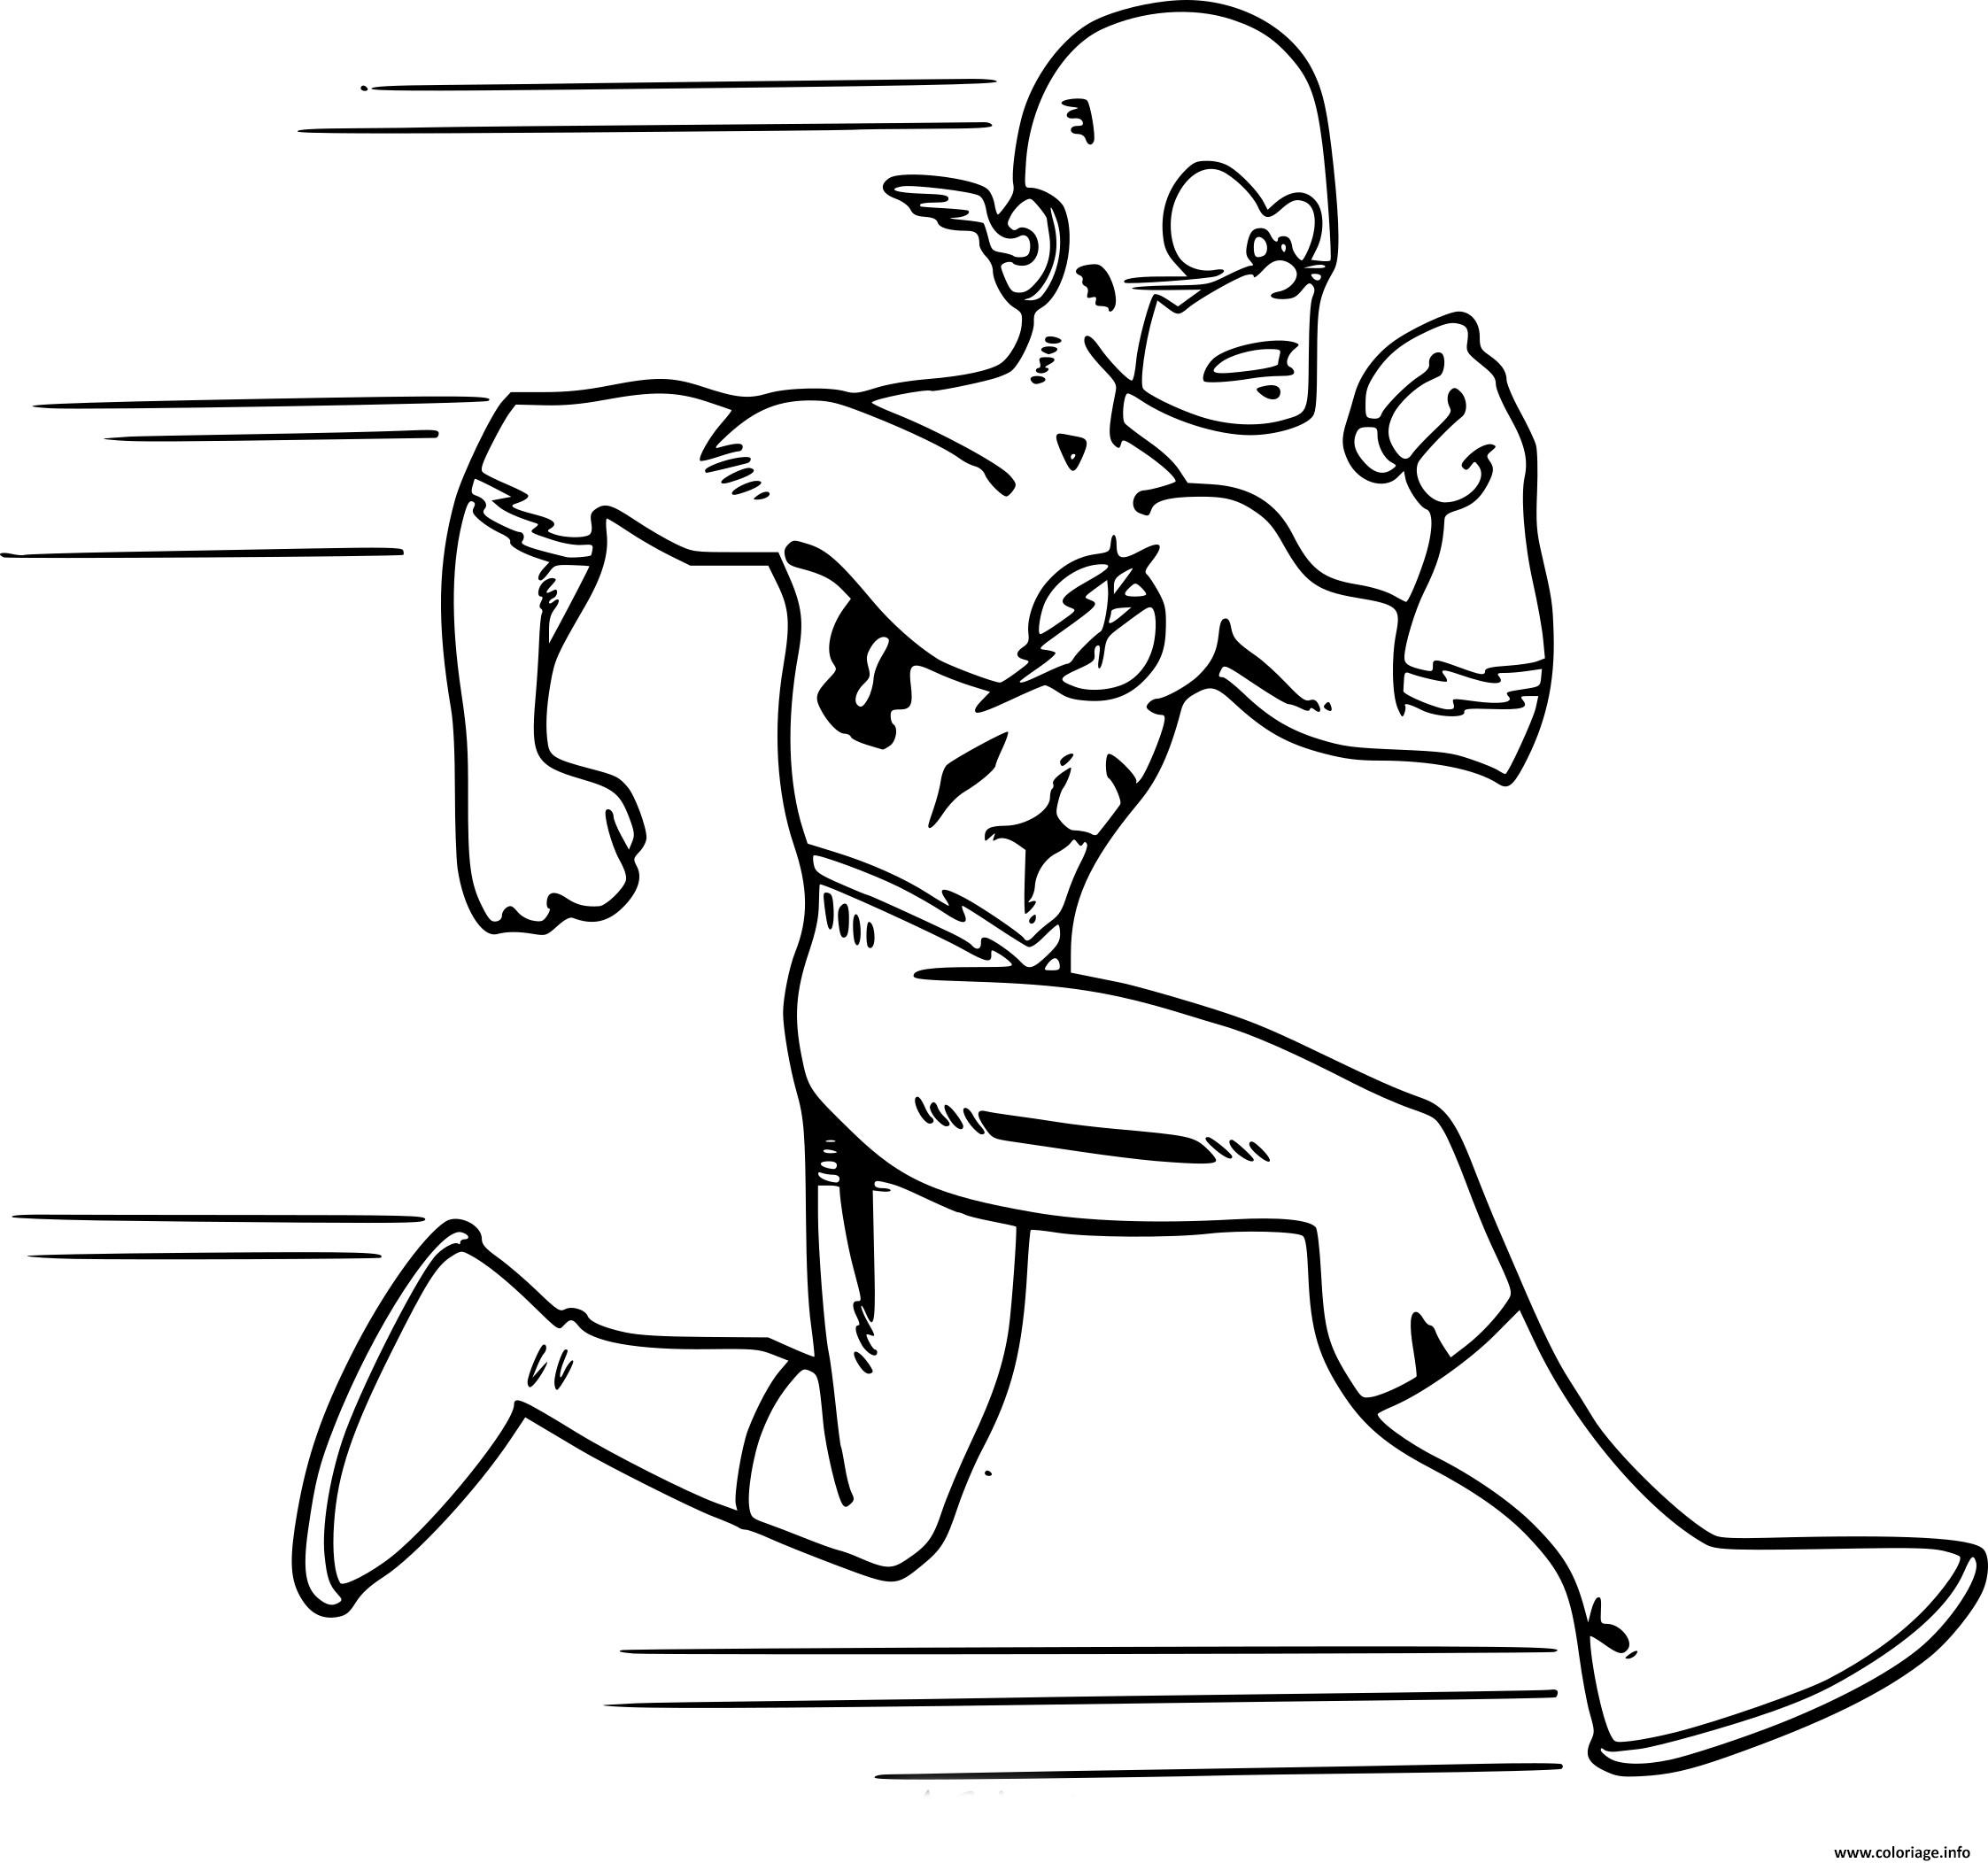 Dessin flash super heros qui court cartoon Coloriage Gratuit à Imprimer